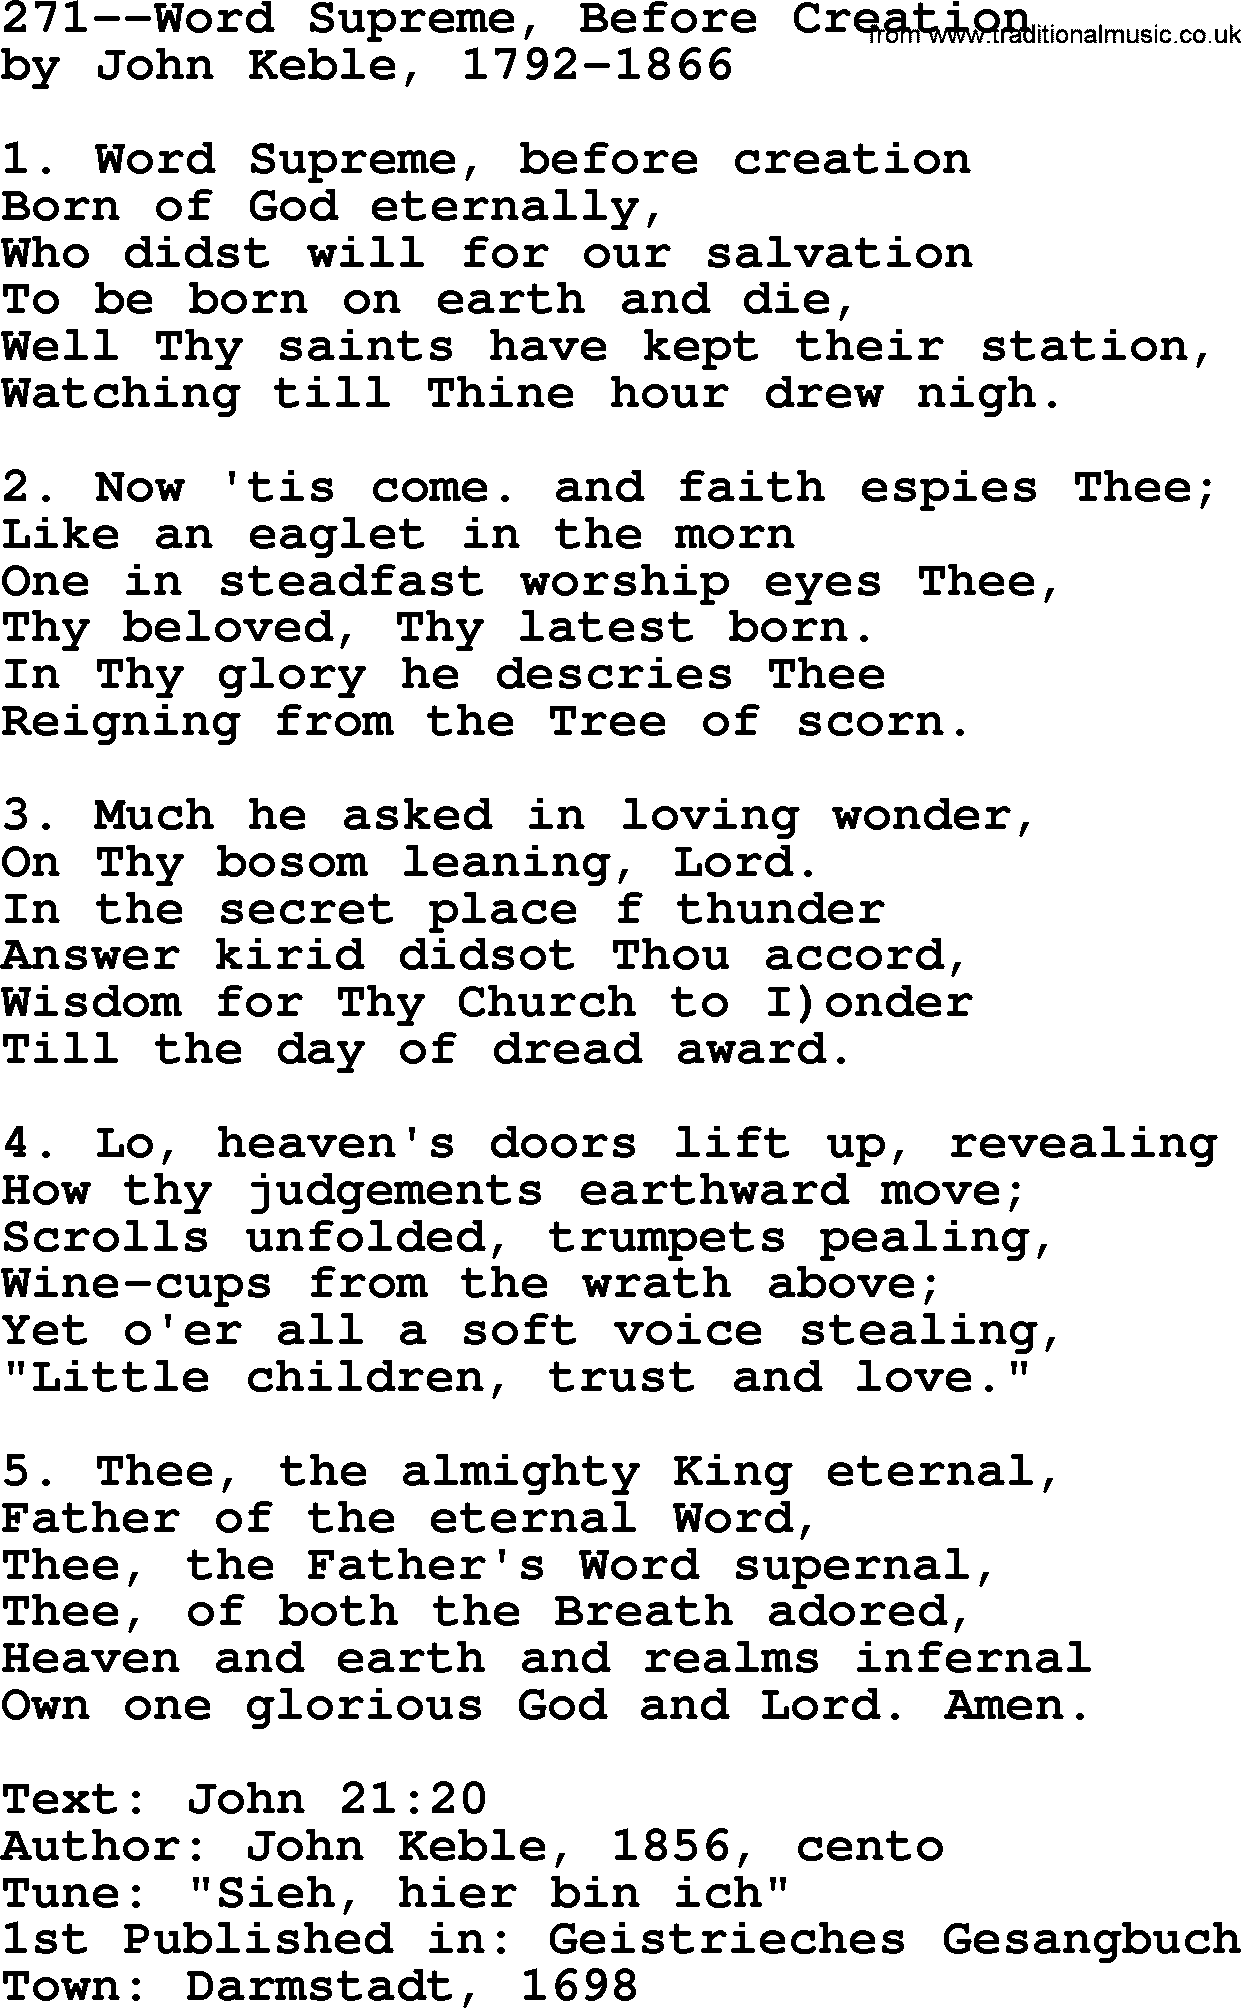 Lutheran Hymn: 271--Word Supreme, Before Creation.txt lyrics with PDF